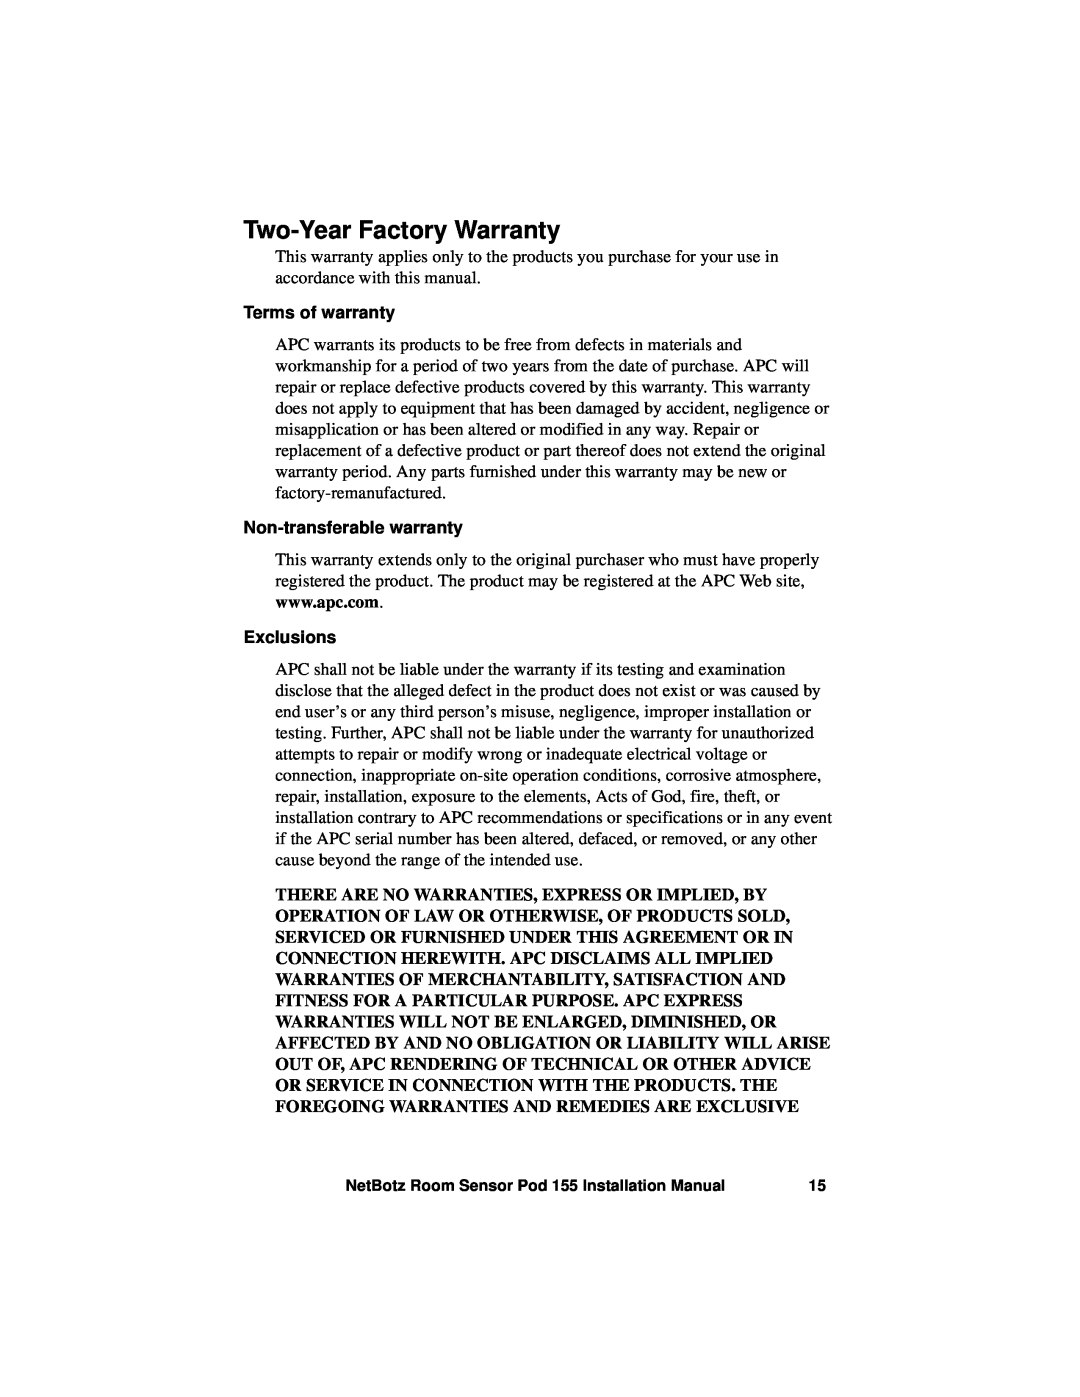 APC NBPD0155 installation manual Two-YearFactory Warranty, Terms of warranty, Non-transferablewarranty, Exclusions 